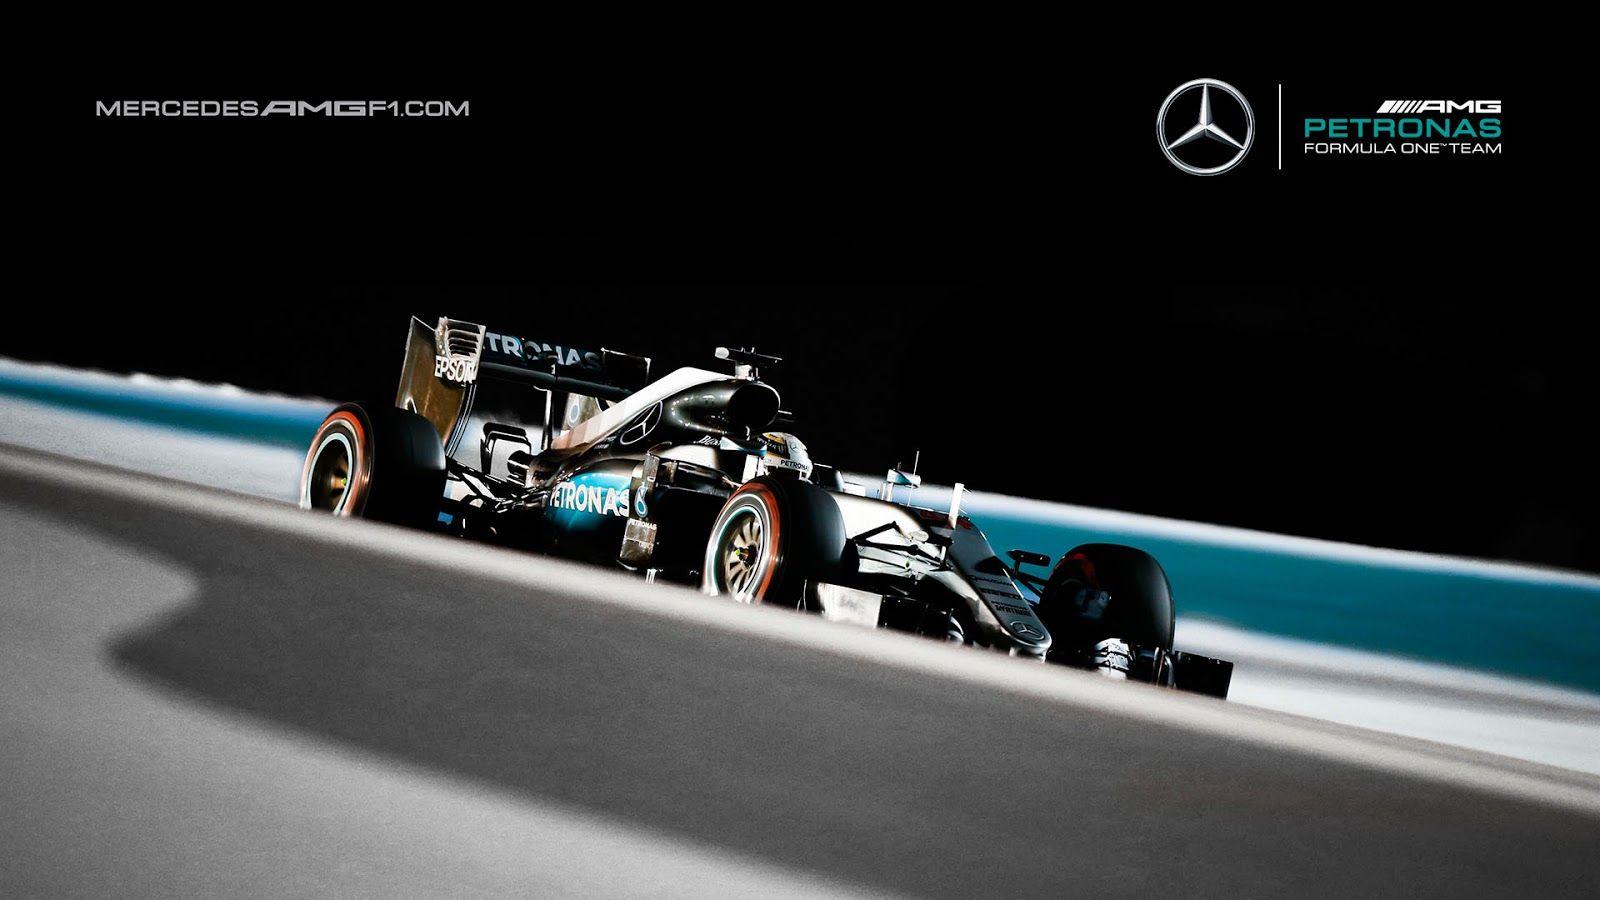 Mercedes AMG Petronas W07 2016 F1 Wallpaper